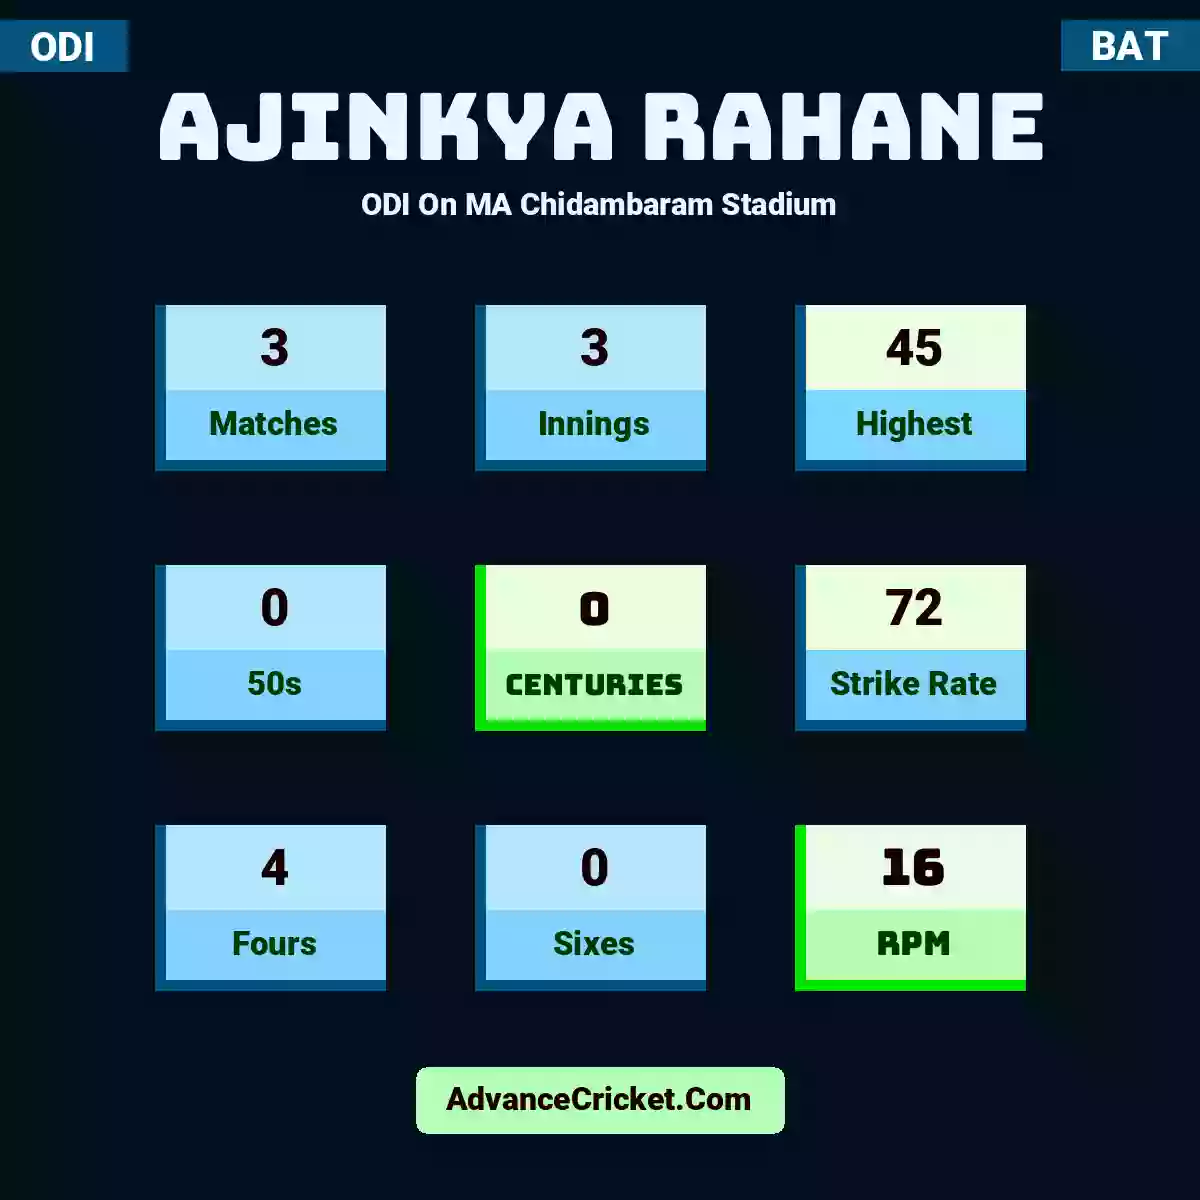 Ajinkya Rahane ODI  On MA Chidambaram Stadium, Ajinkya Rahane played 3 matches, scored 45 runs as highest, 0 half-centuries, and 0 centuries, with a strike rate of 72. A.Rahane hit 4 fours and 0 sixes, with an RPM of 16.